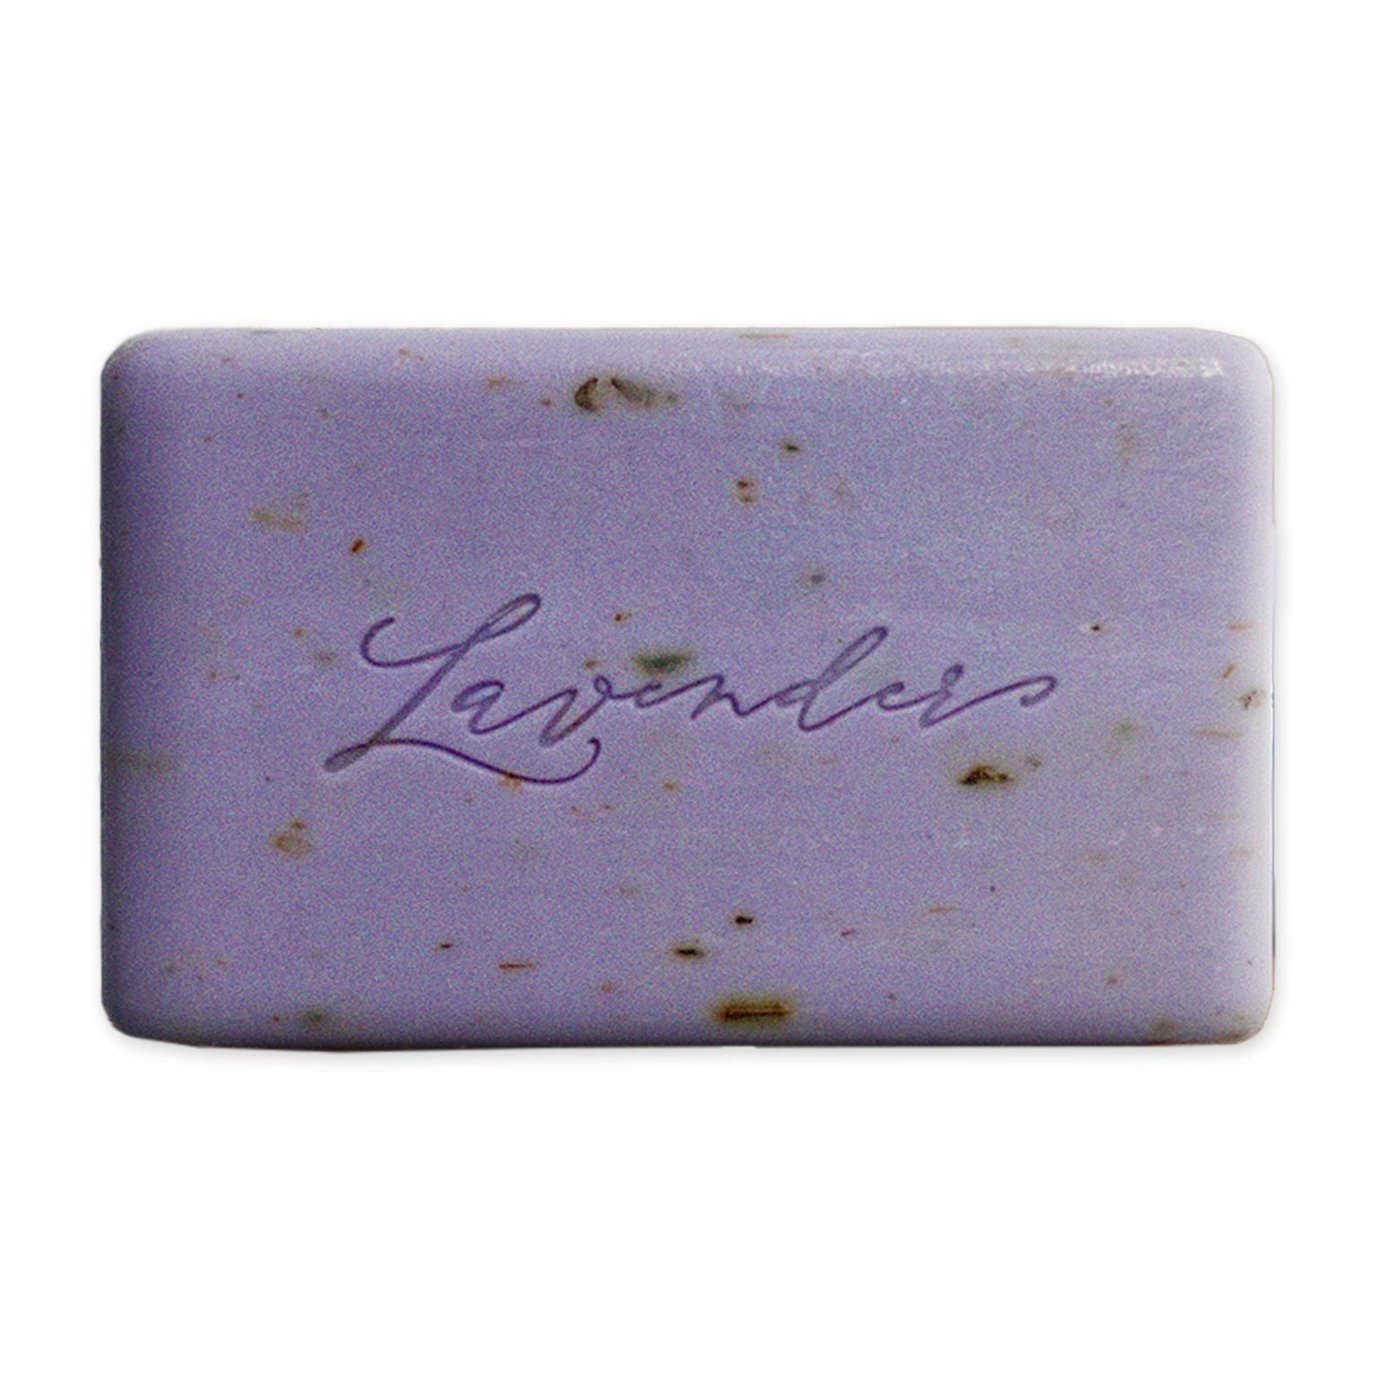 Pre De Provence Lavender Collection Exfoliating Bar Soap 150 g - Boxed Soap